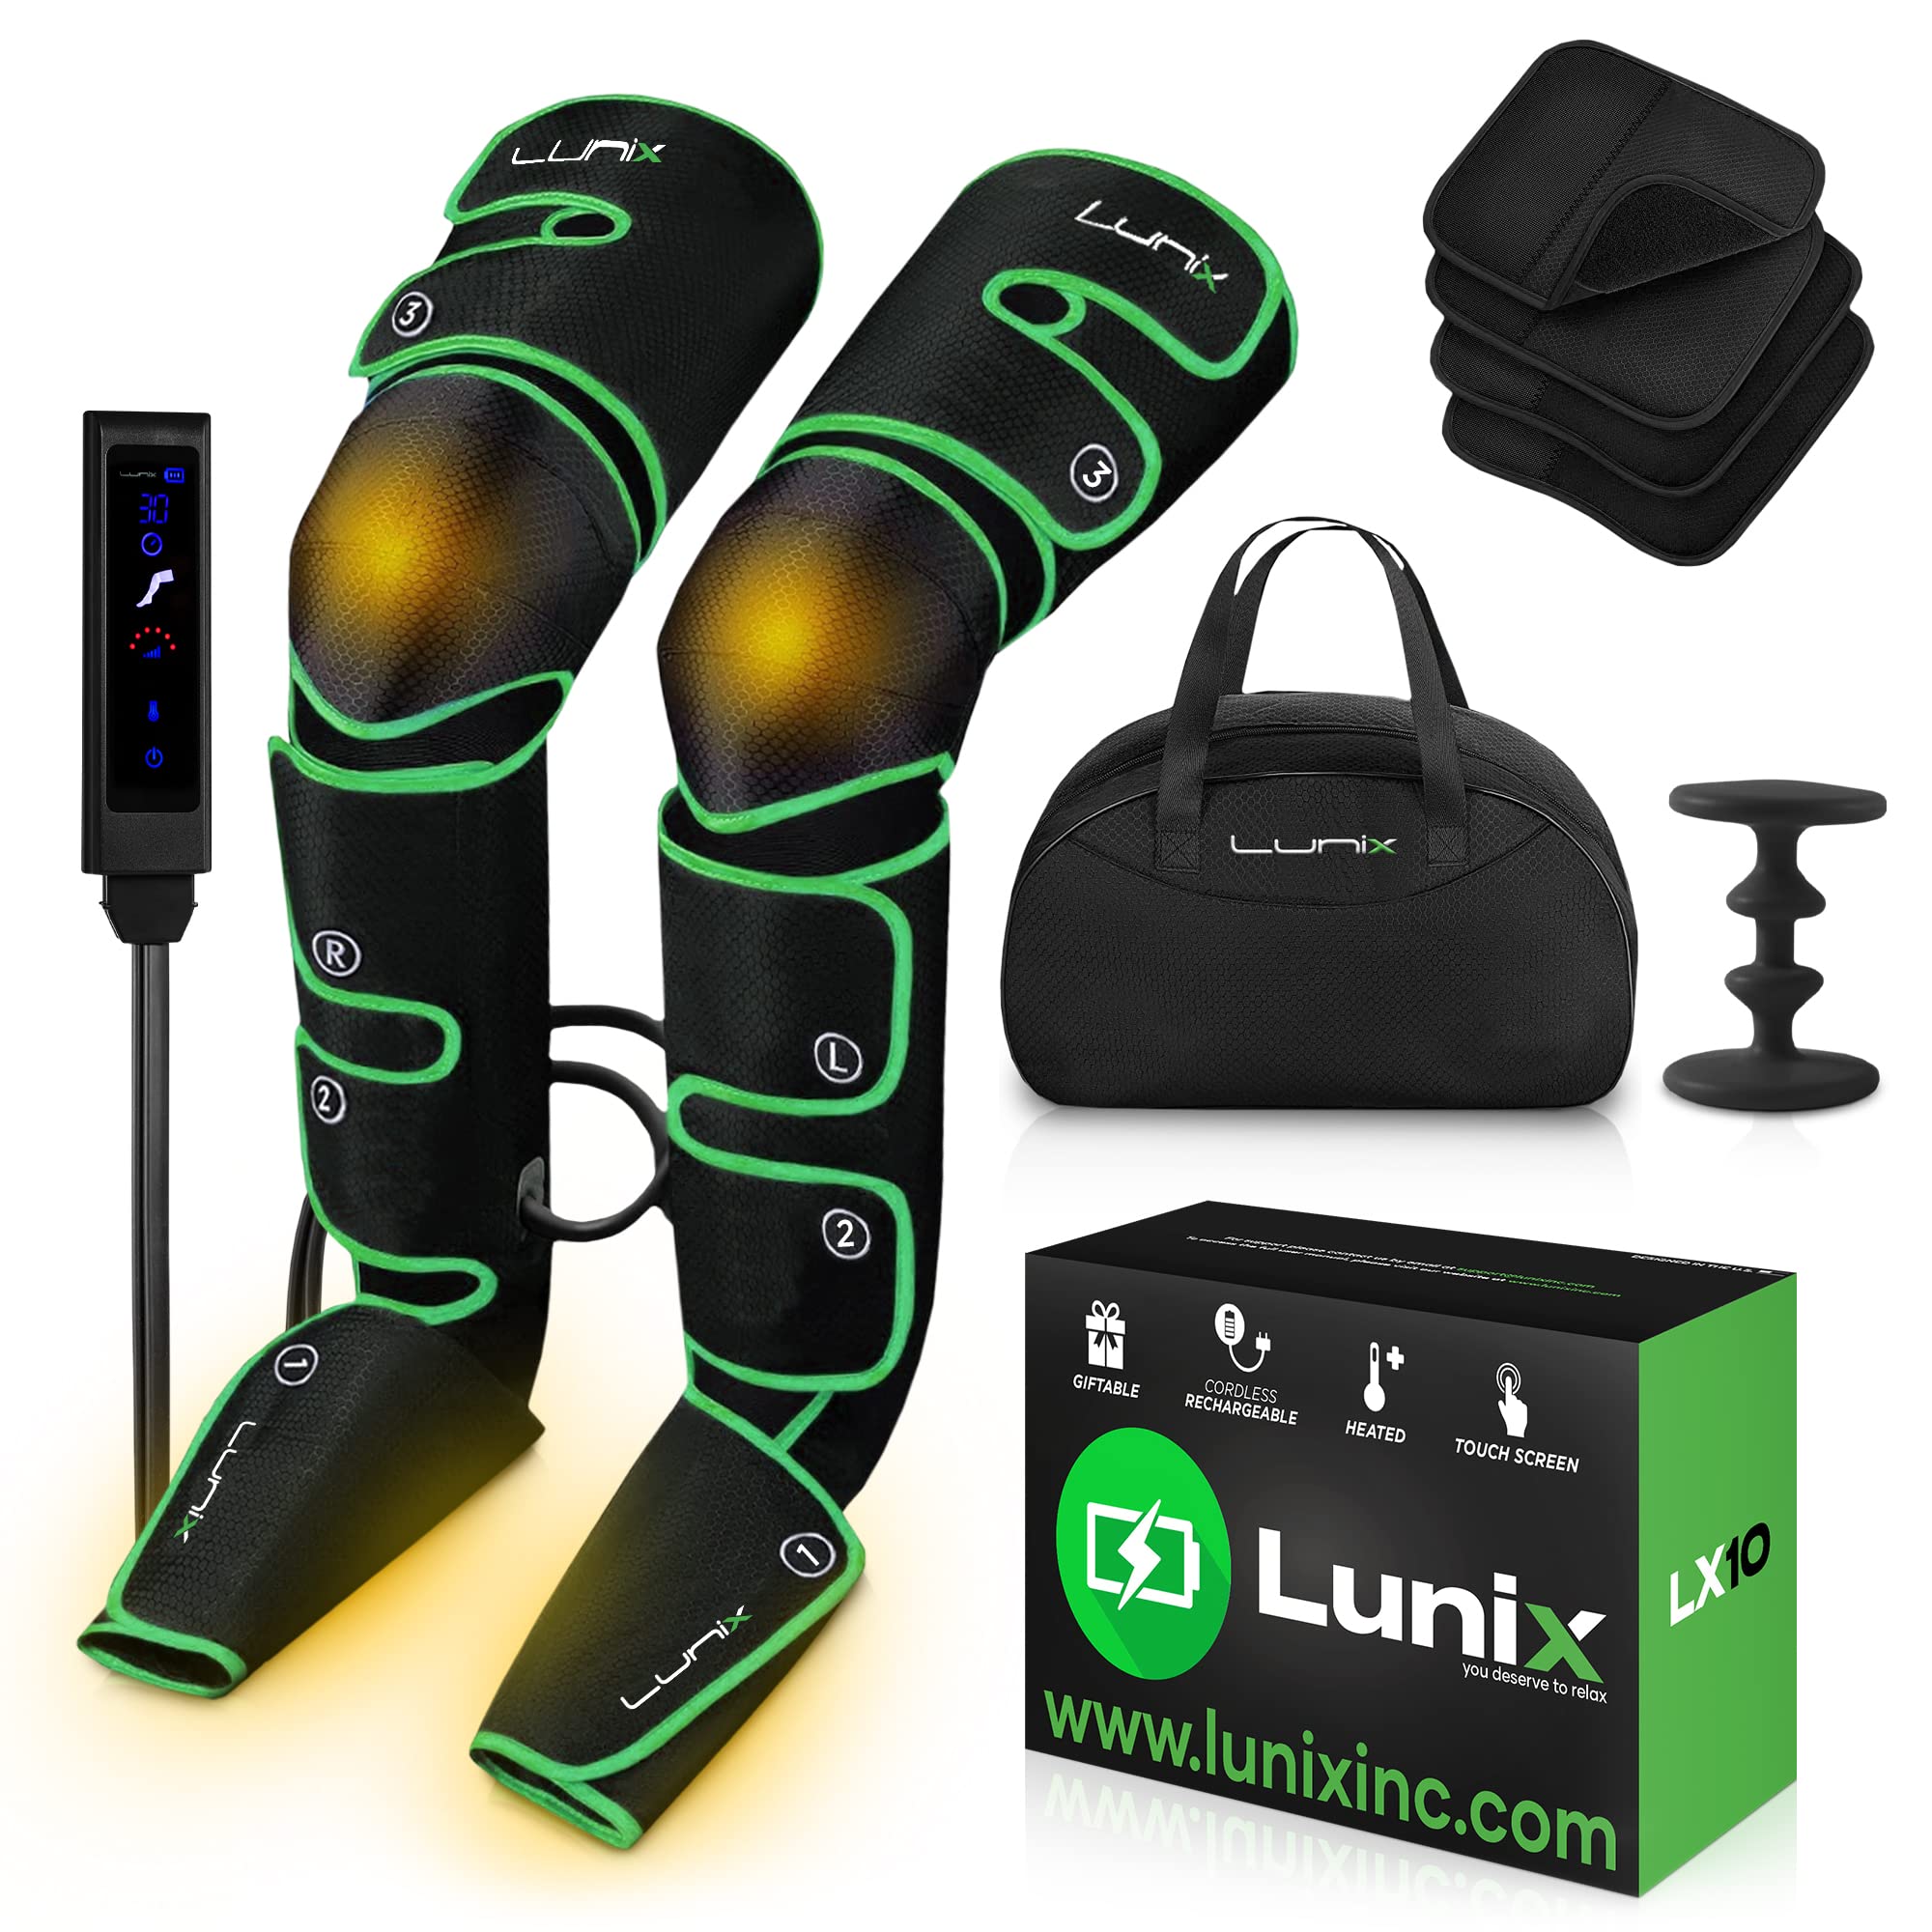 Lunix LX10 Foot, Calf, Leg Air Compression Massager Machine 